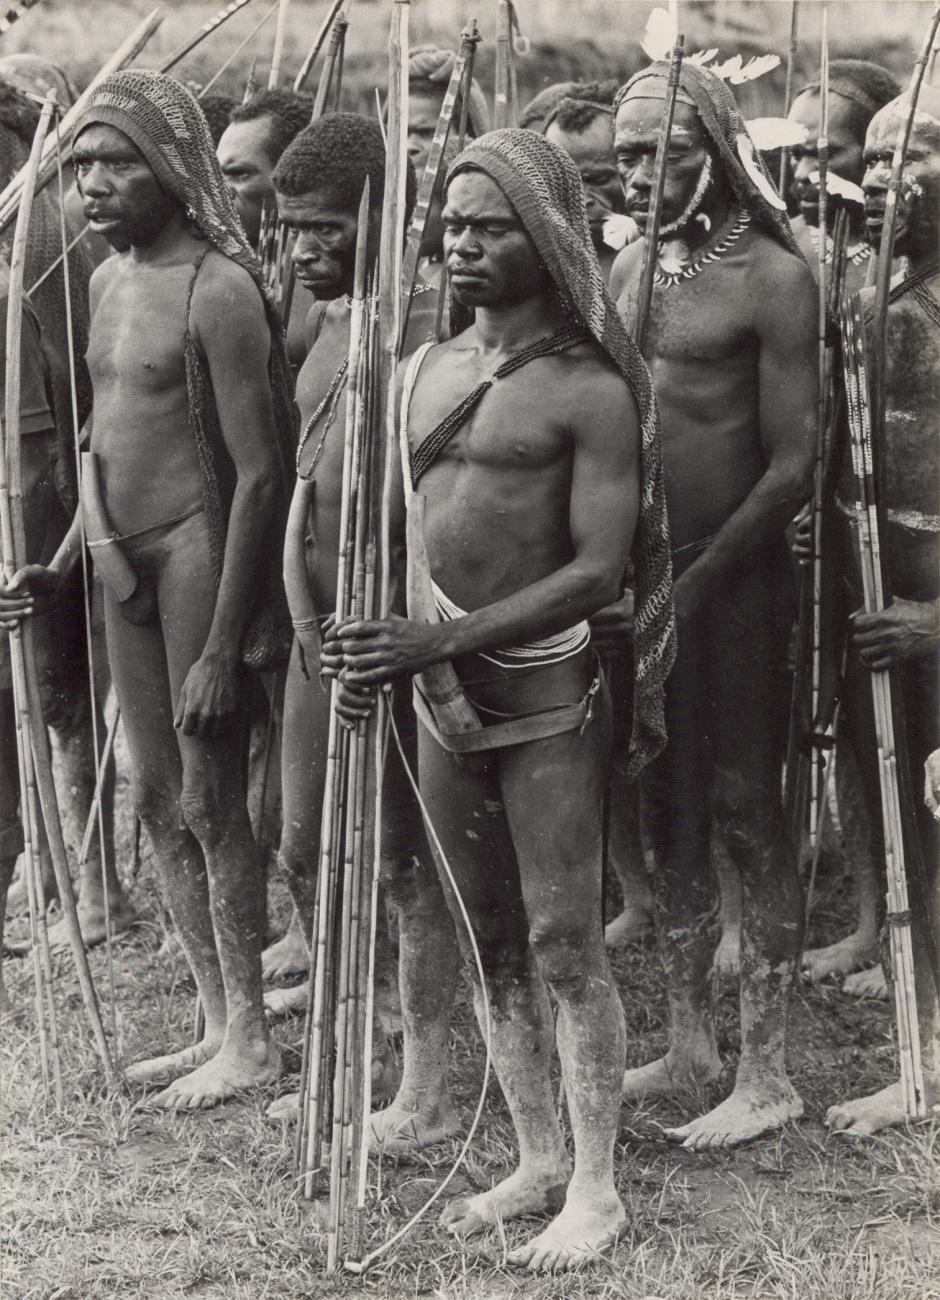 BD/326/36 - 
Ekagi-mannen in de Kamu-vallei
